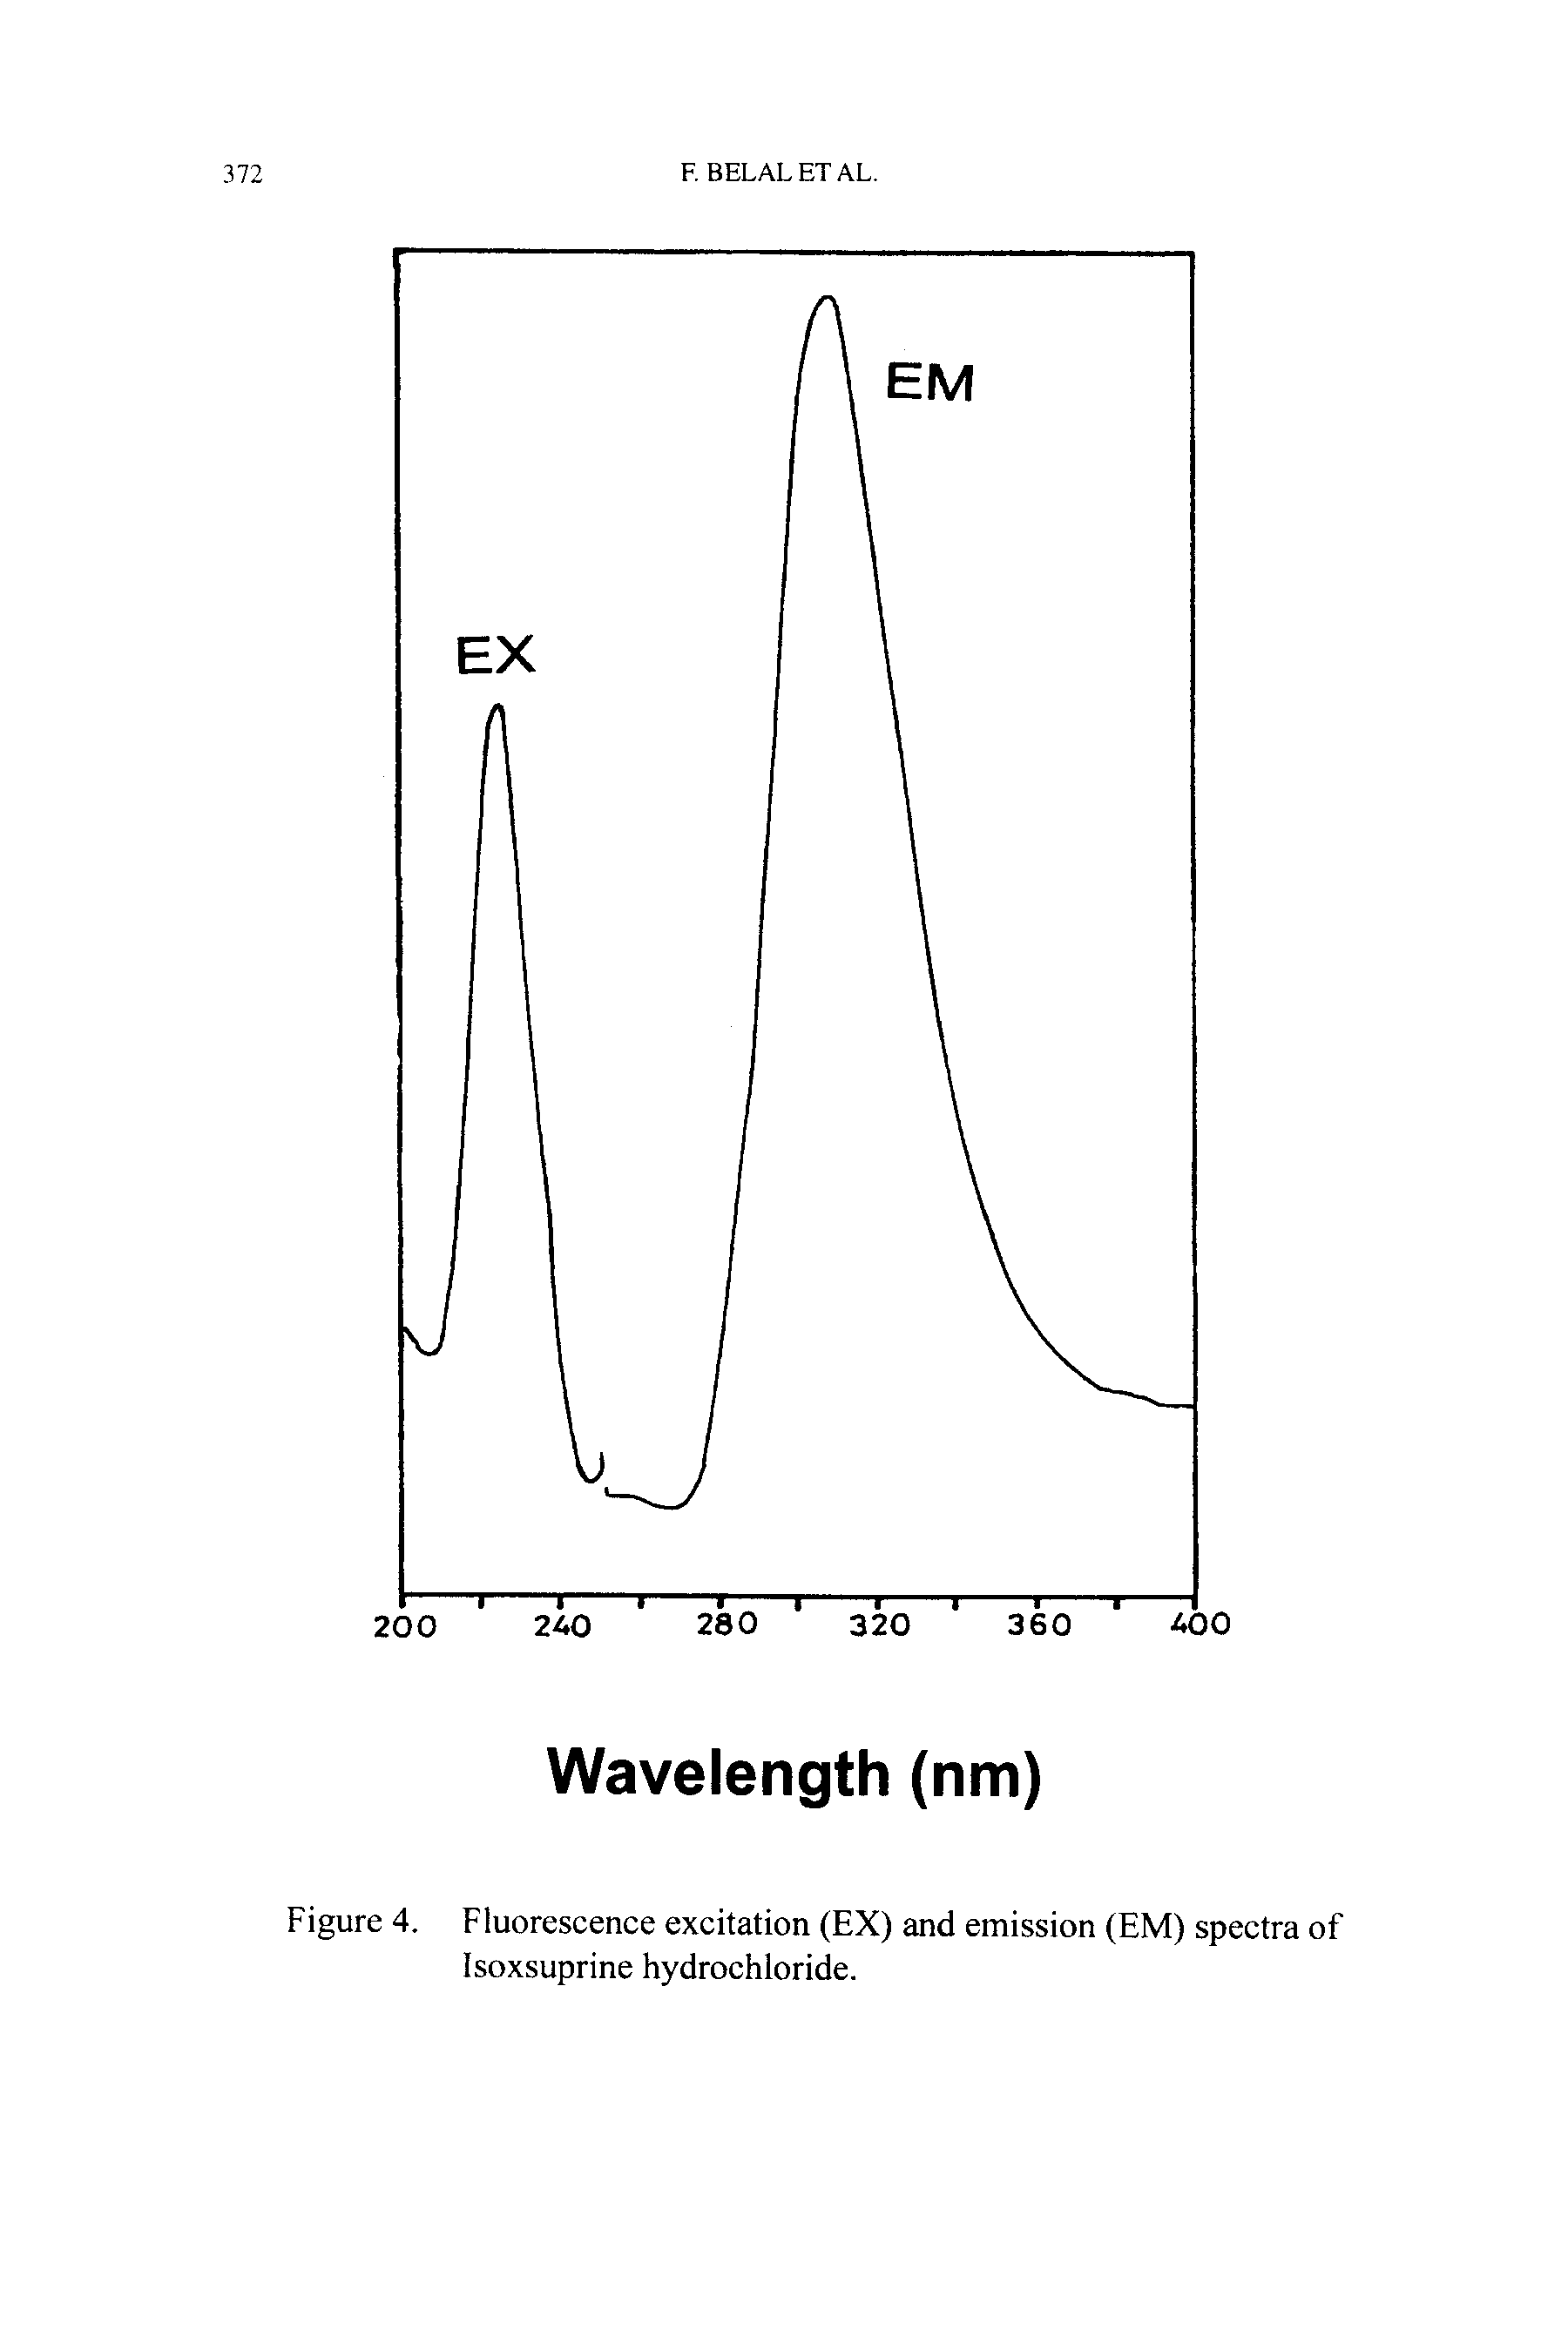 Figure 4. Fluorescence excitation (EX) and emission (EM) spectra of Isoxsuprine hydrochloride.